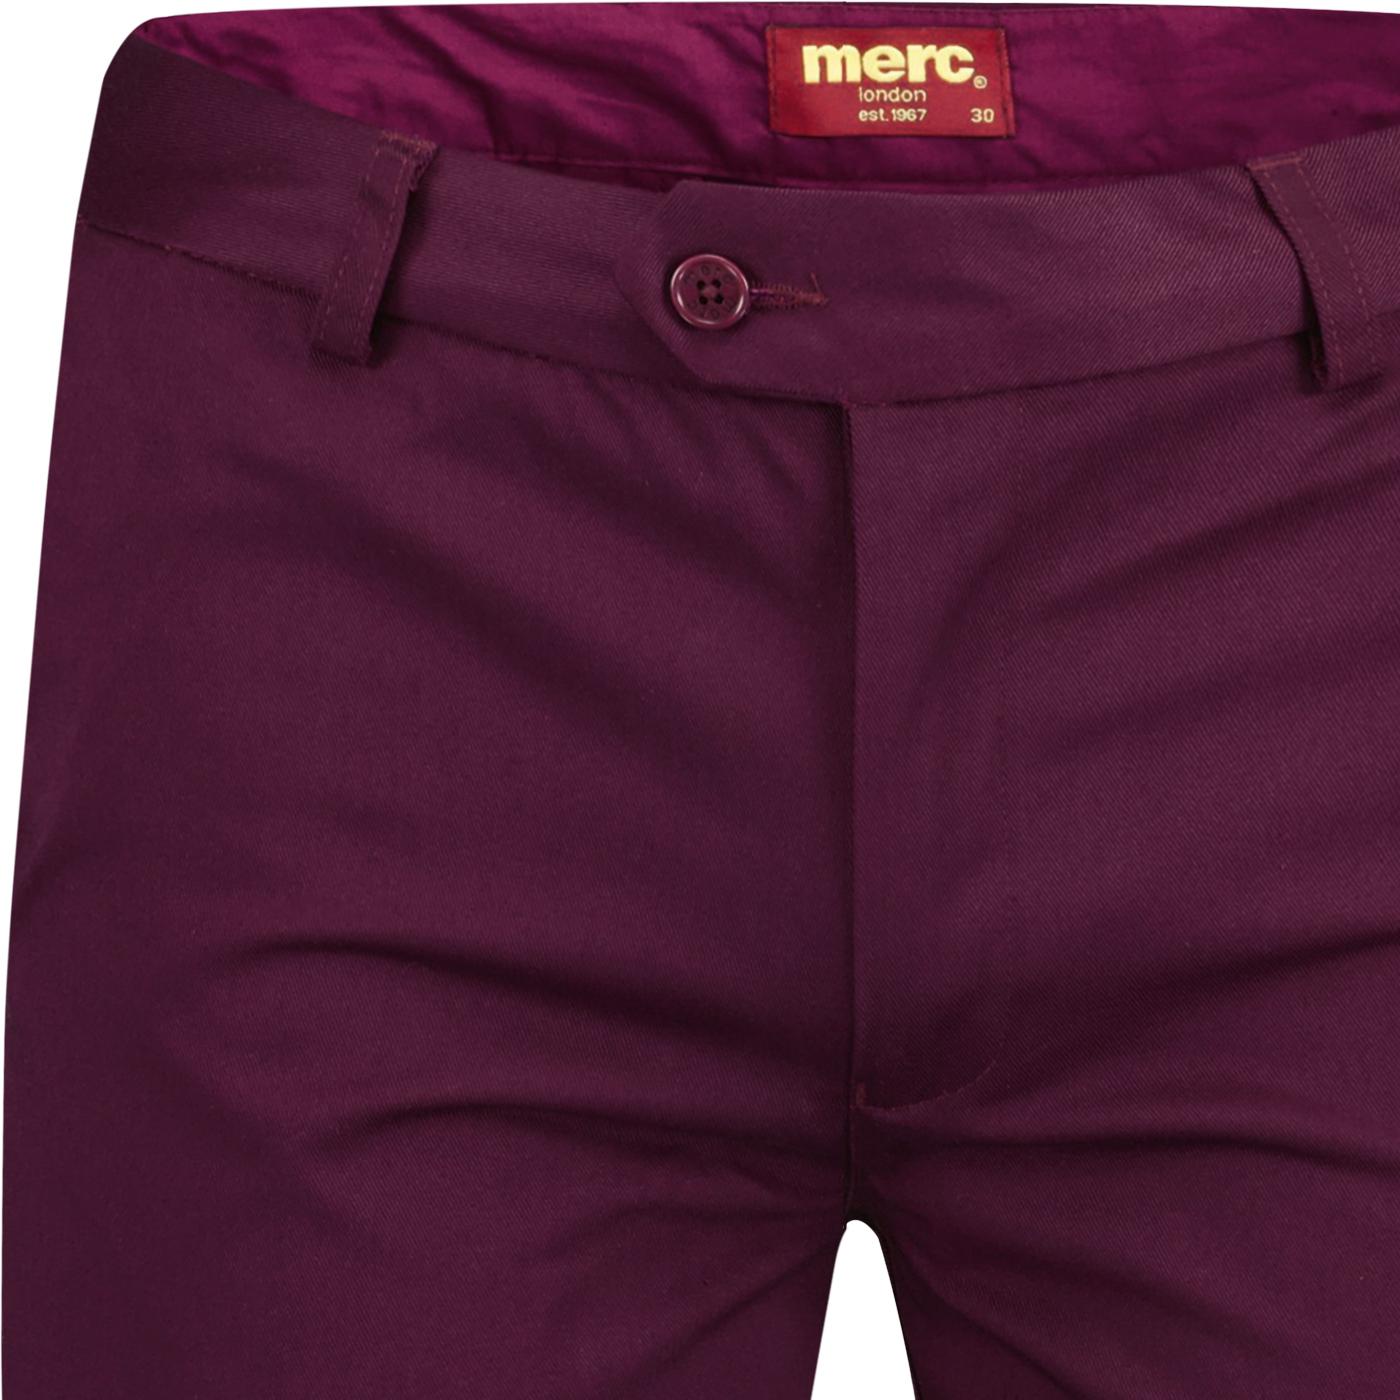 MERC Winston Retro 60s Mod Straight Leg Sta Press Trousers Wine